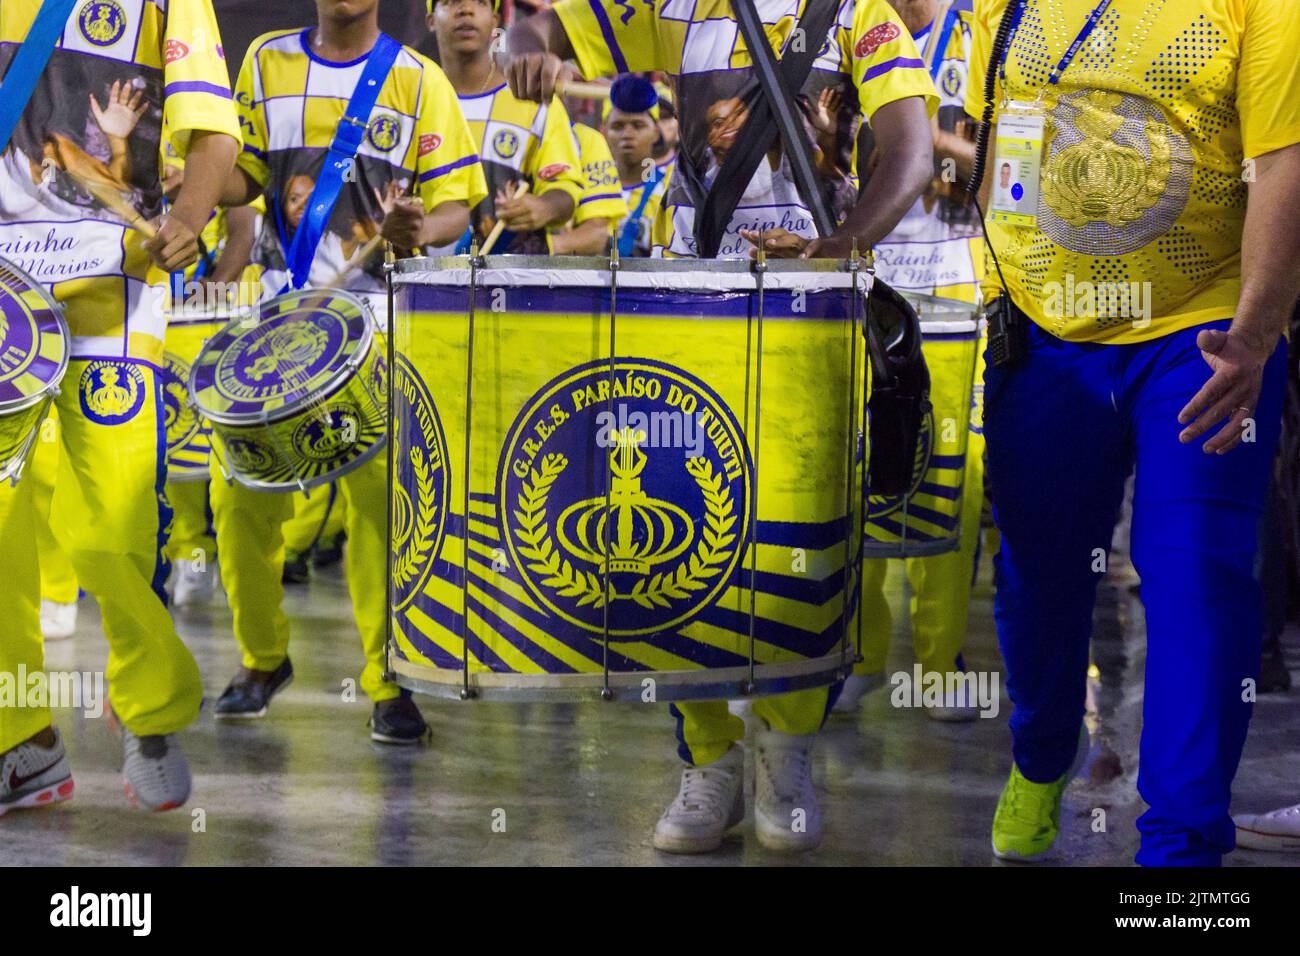 Trommeln aus der Sambaschule paraiso do tuiuti in Rio de Janeiro, Brasilien - 17. Januar 2016: Trommeln aus der Sambaschule paraiso do tuiuti während des sc Stockfoto